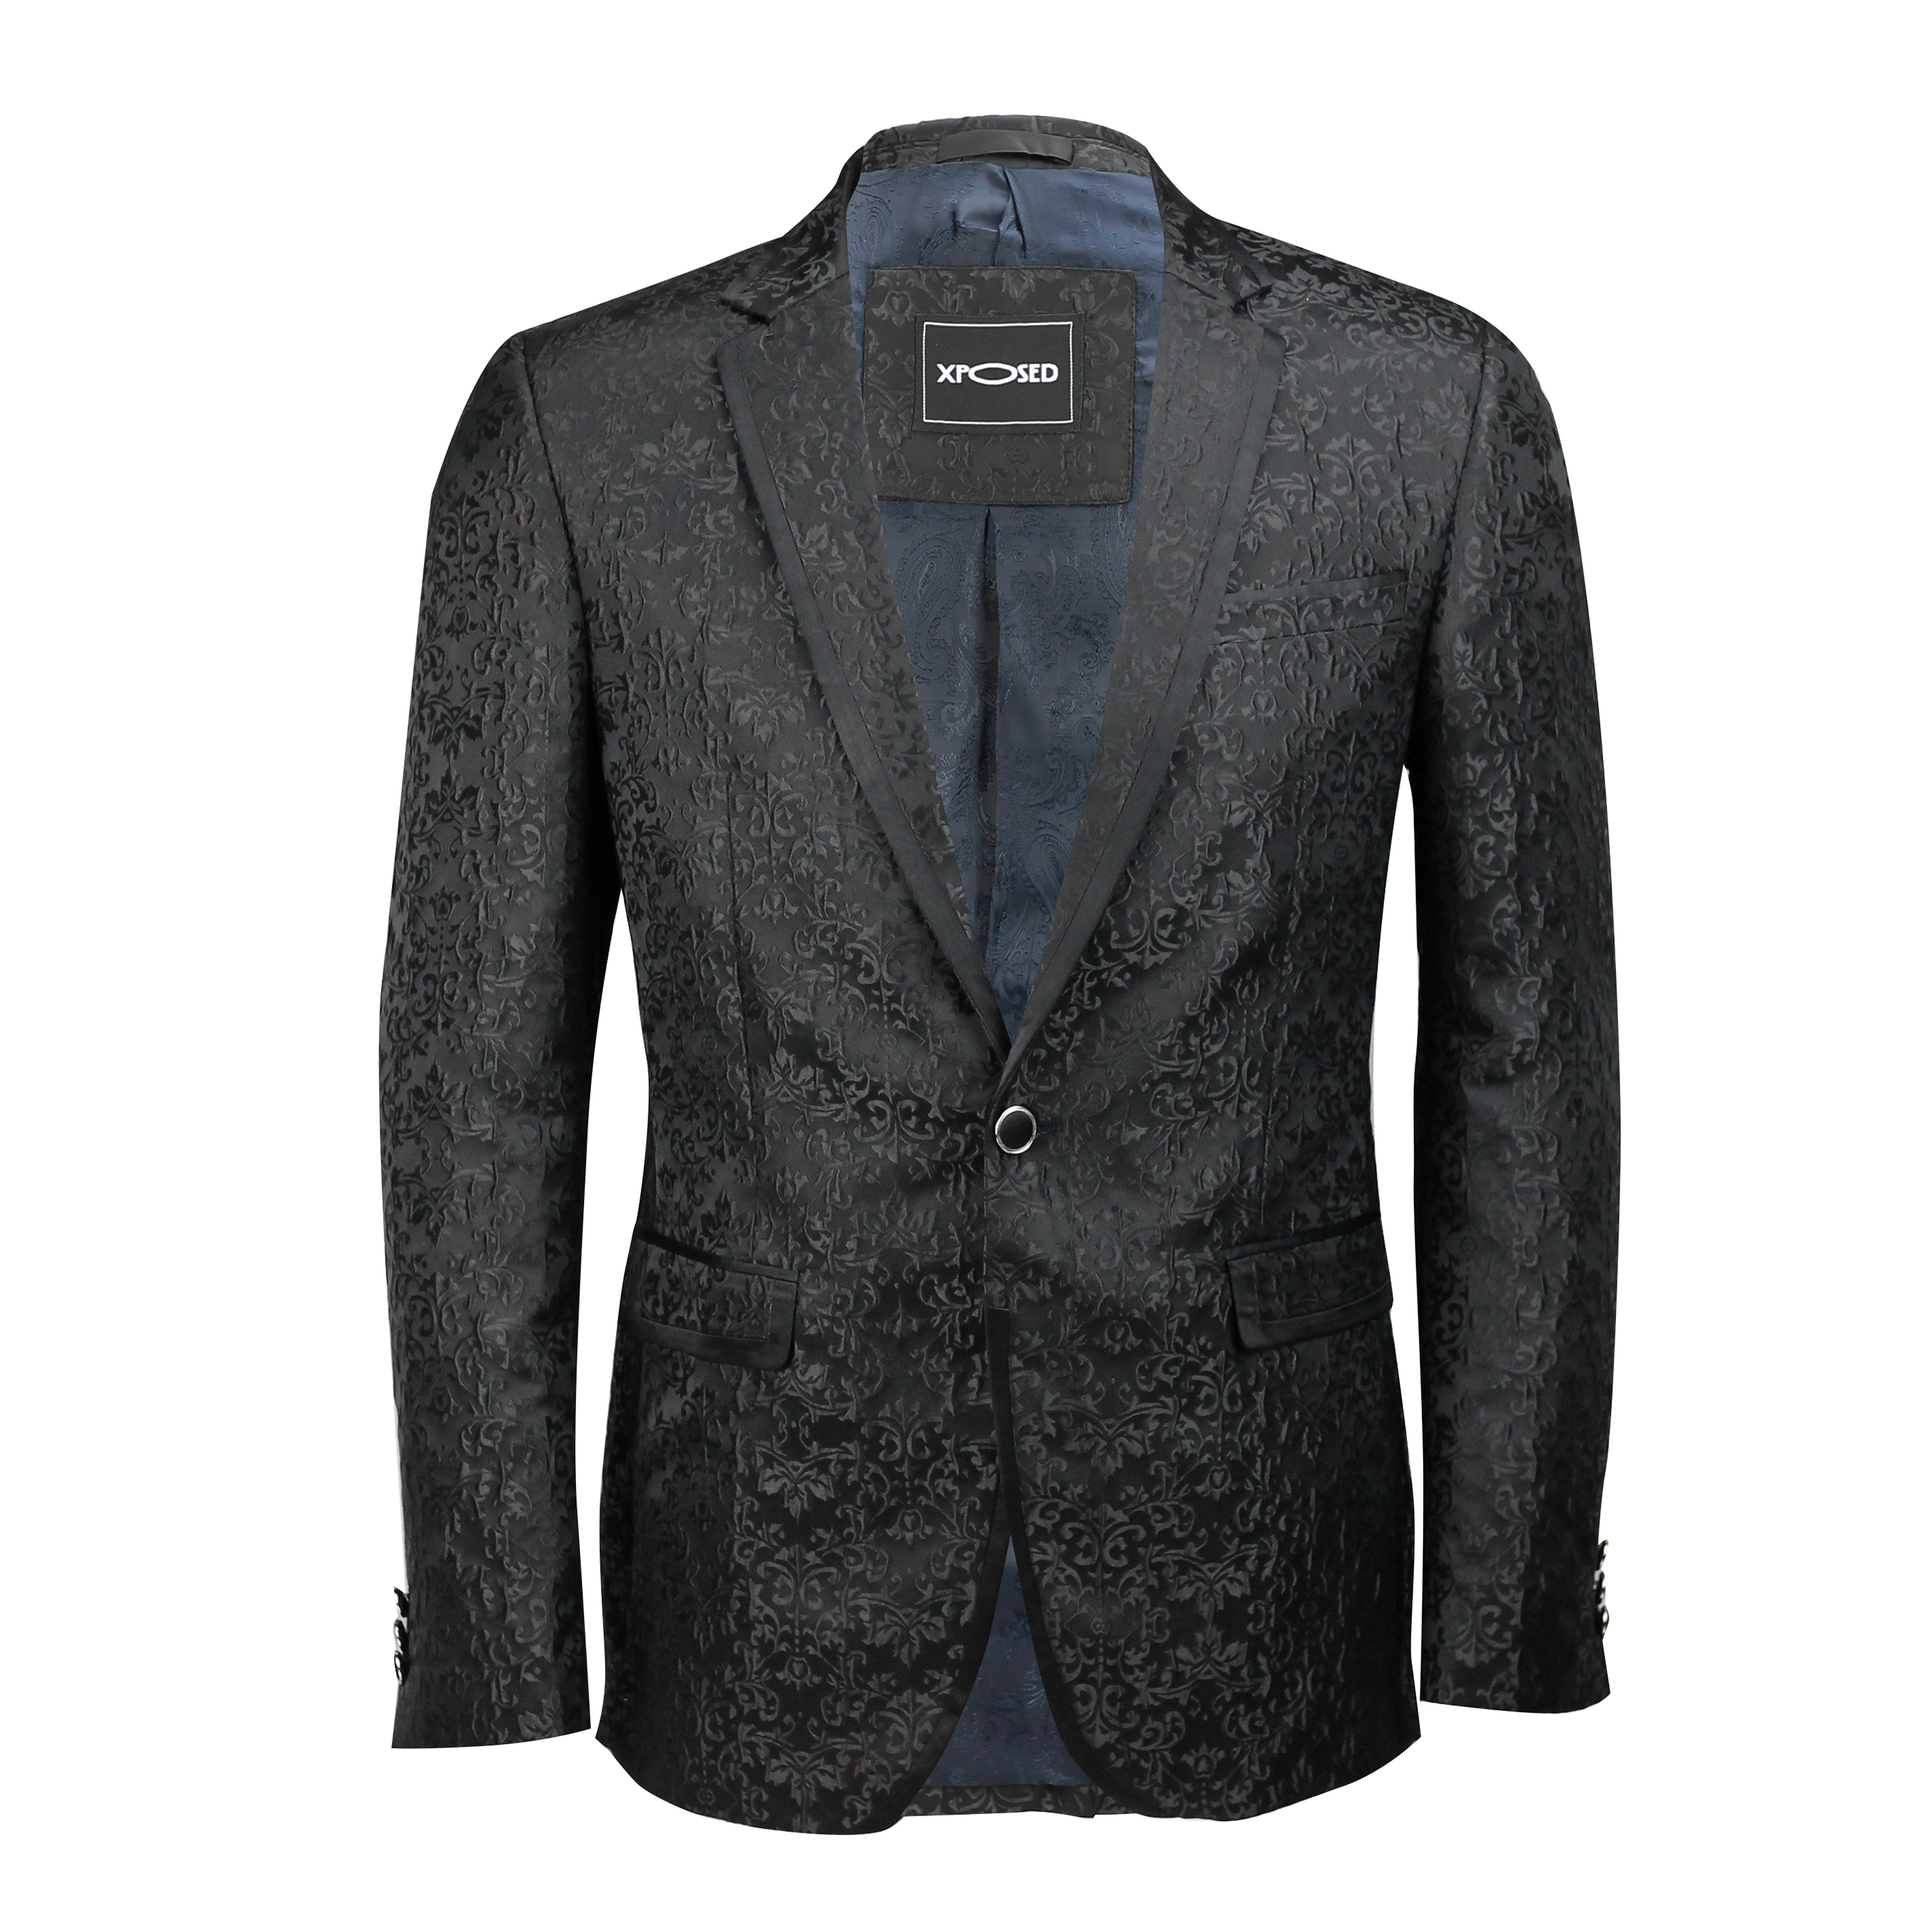 Xposed Mens Blue Paisley Print Italian Designer Suit Jacket Fitted Blazer 